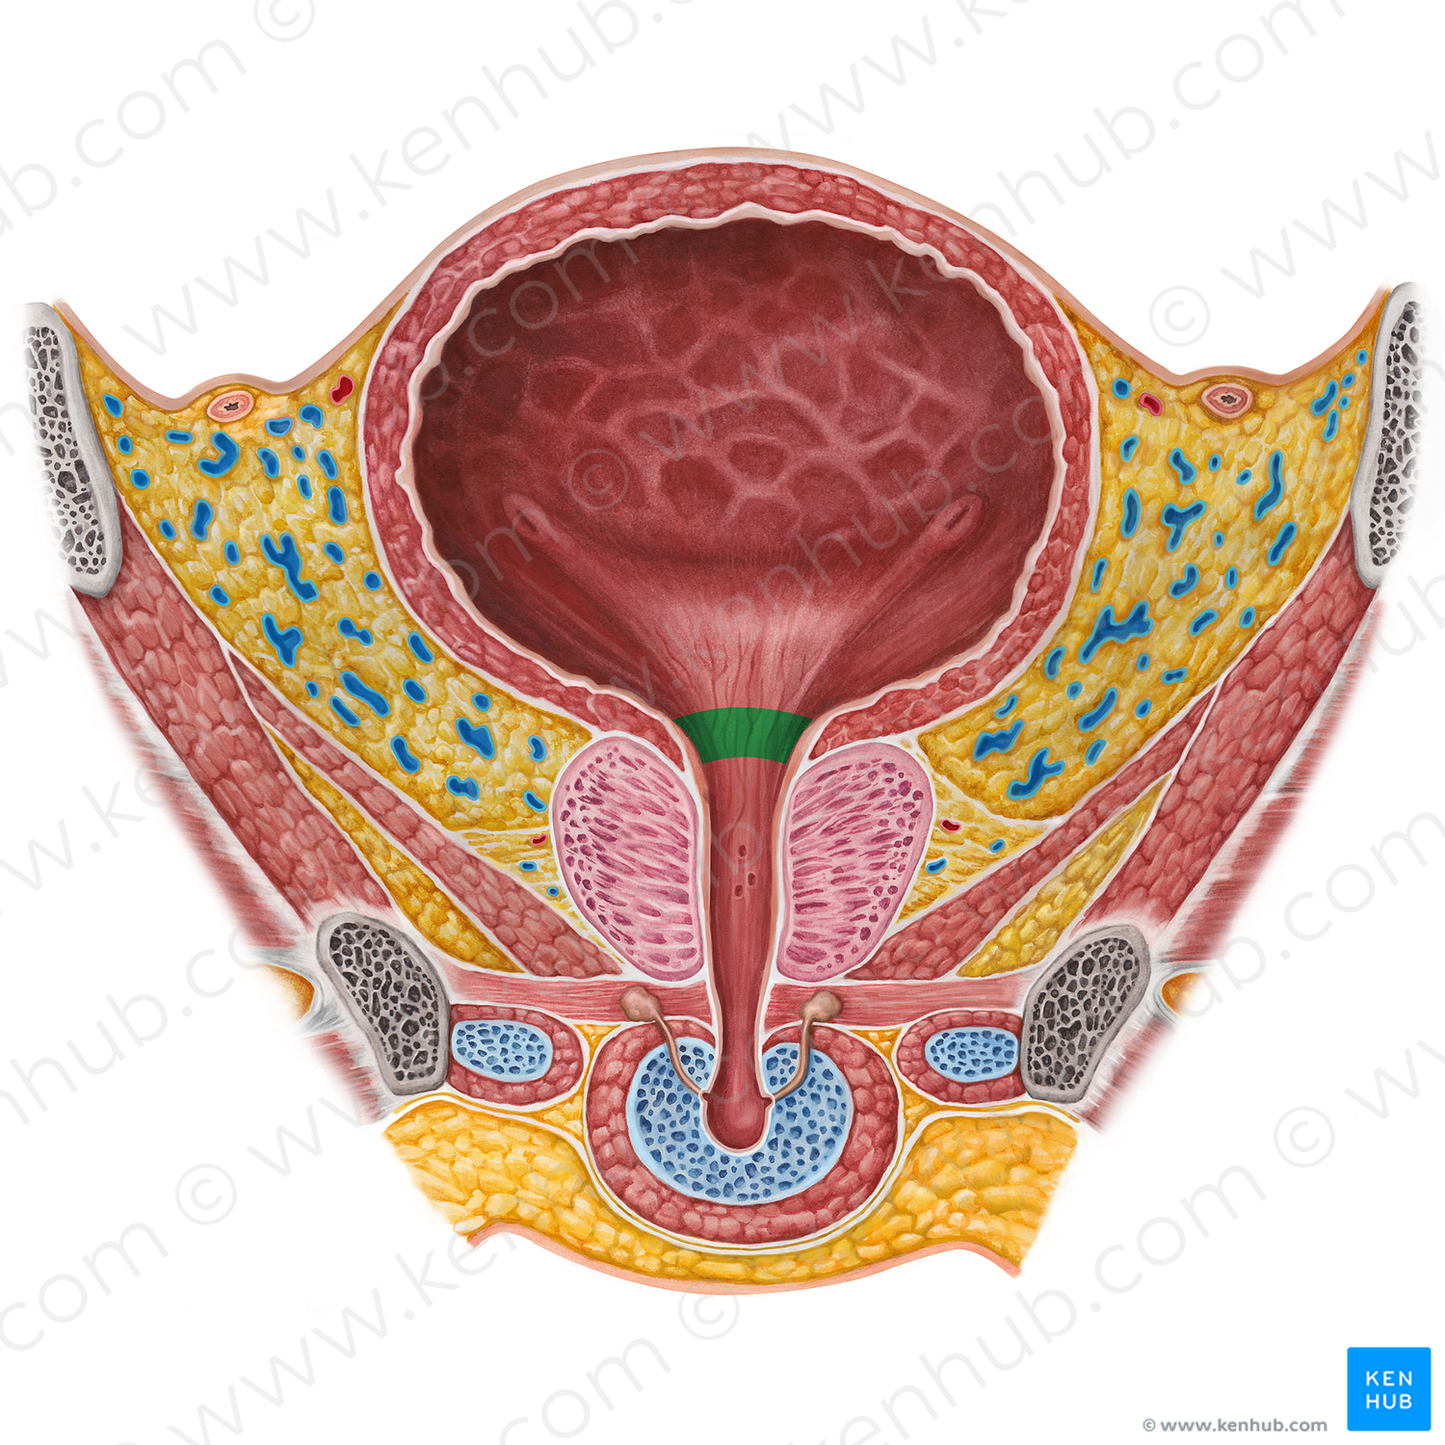 Neck of urinary bladder (#2583)